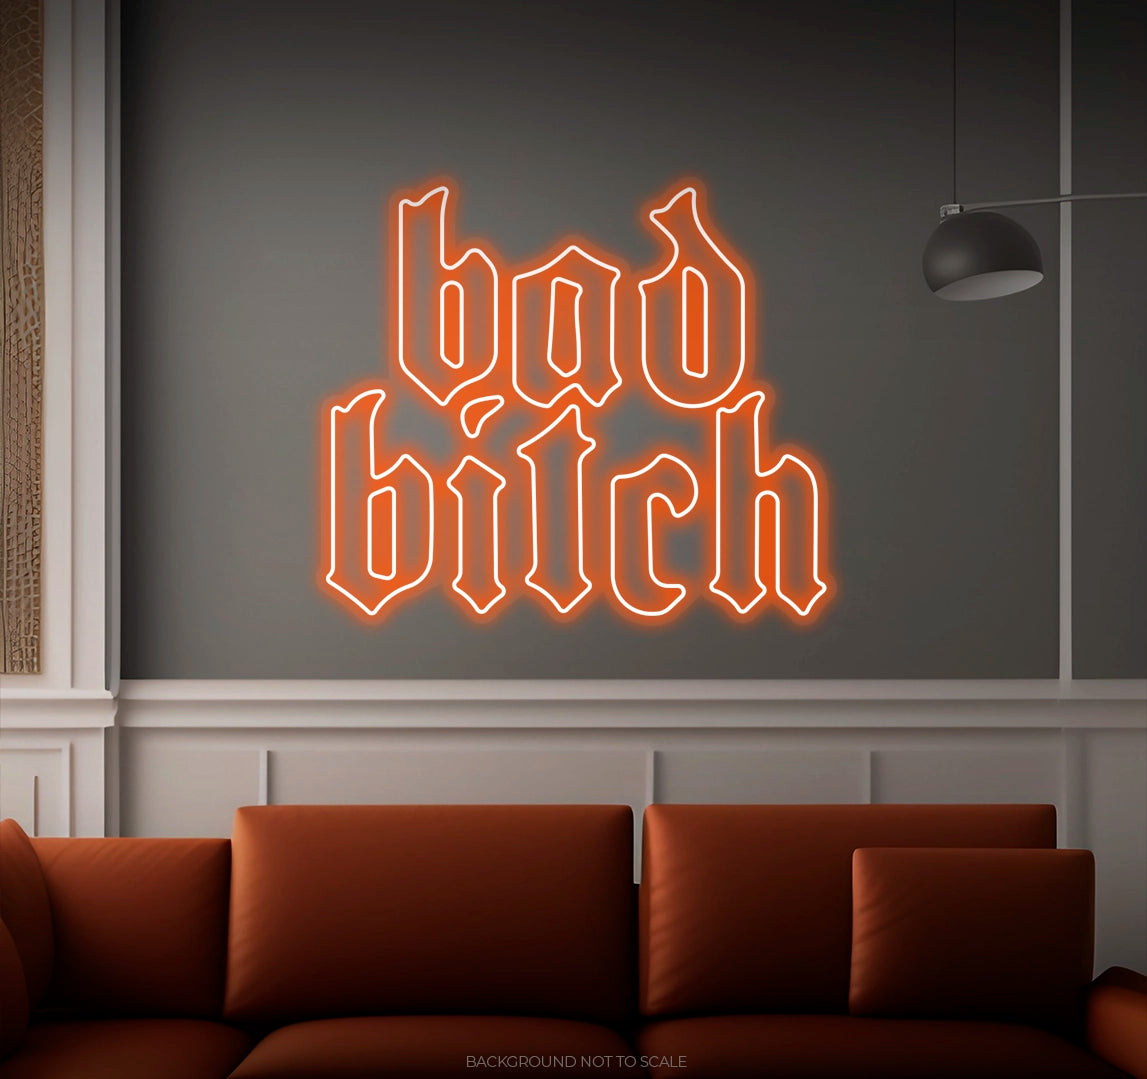 Gothic bad bitch LED neon